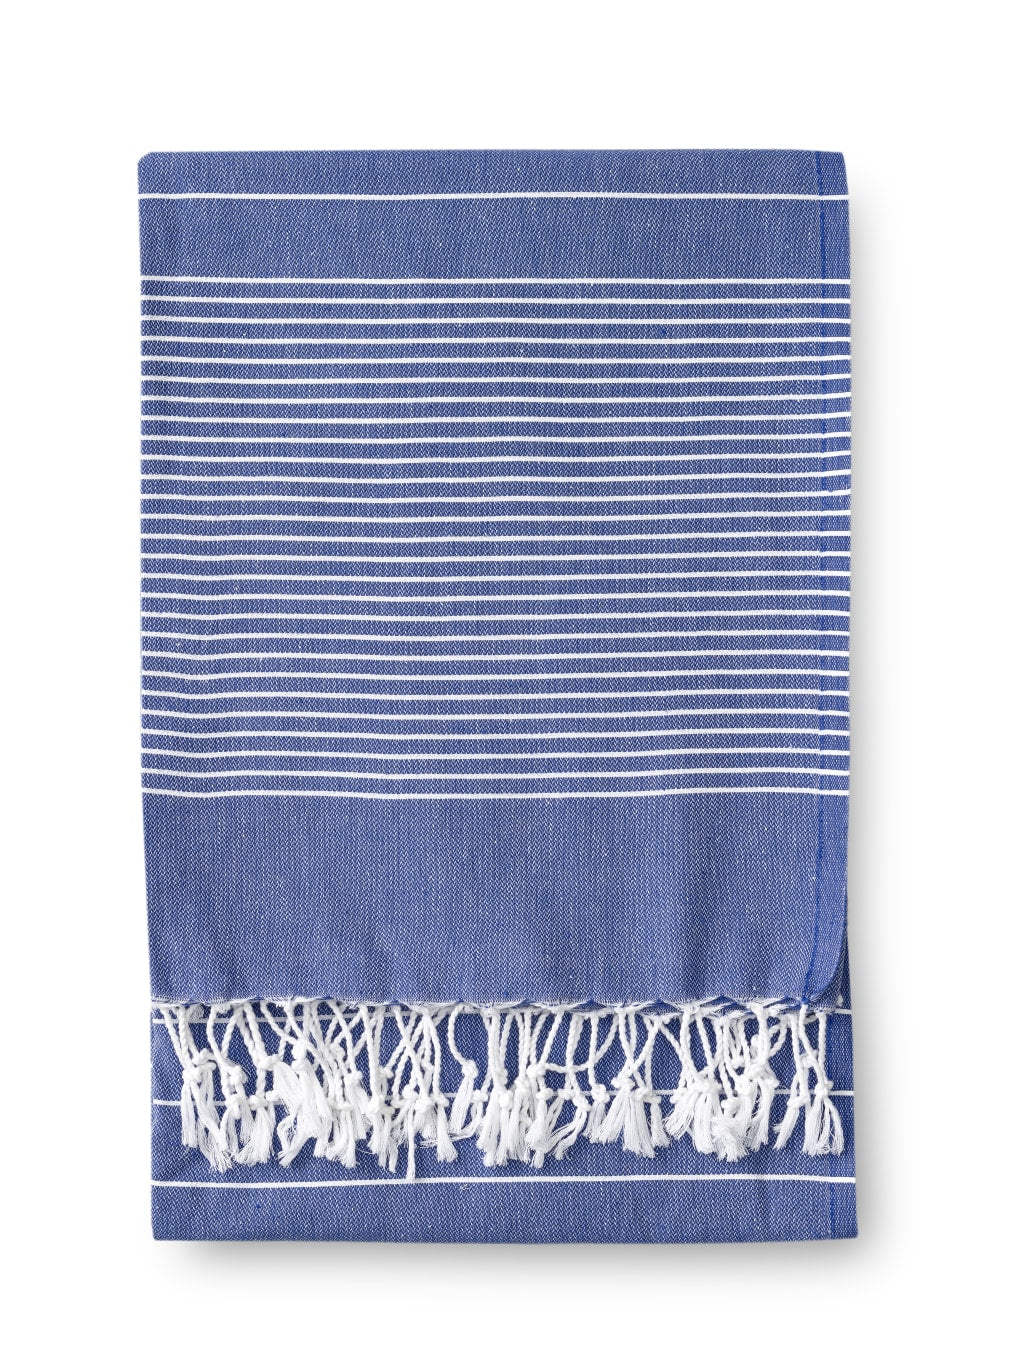 Huili Hamam towel